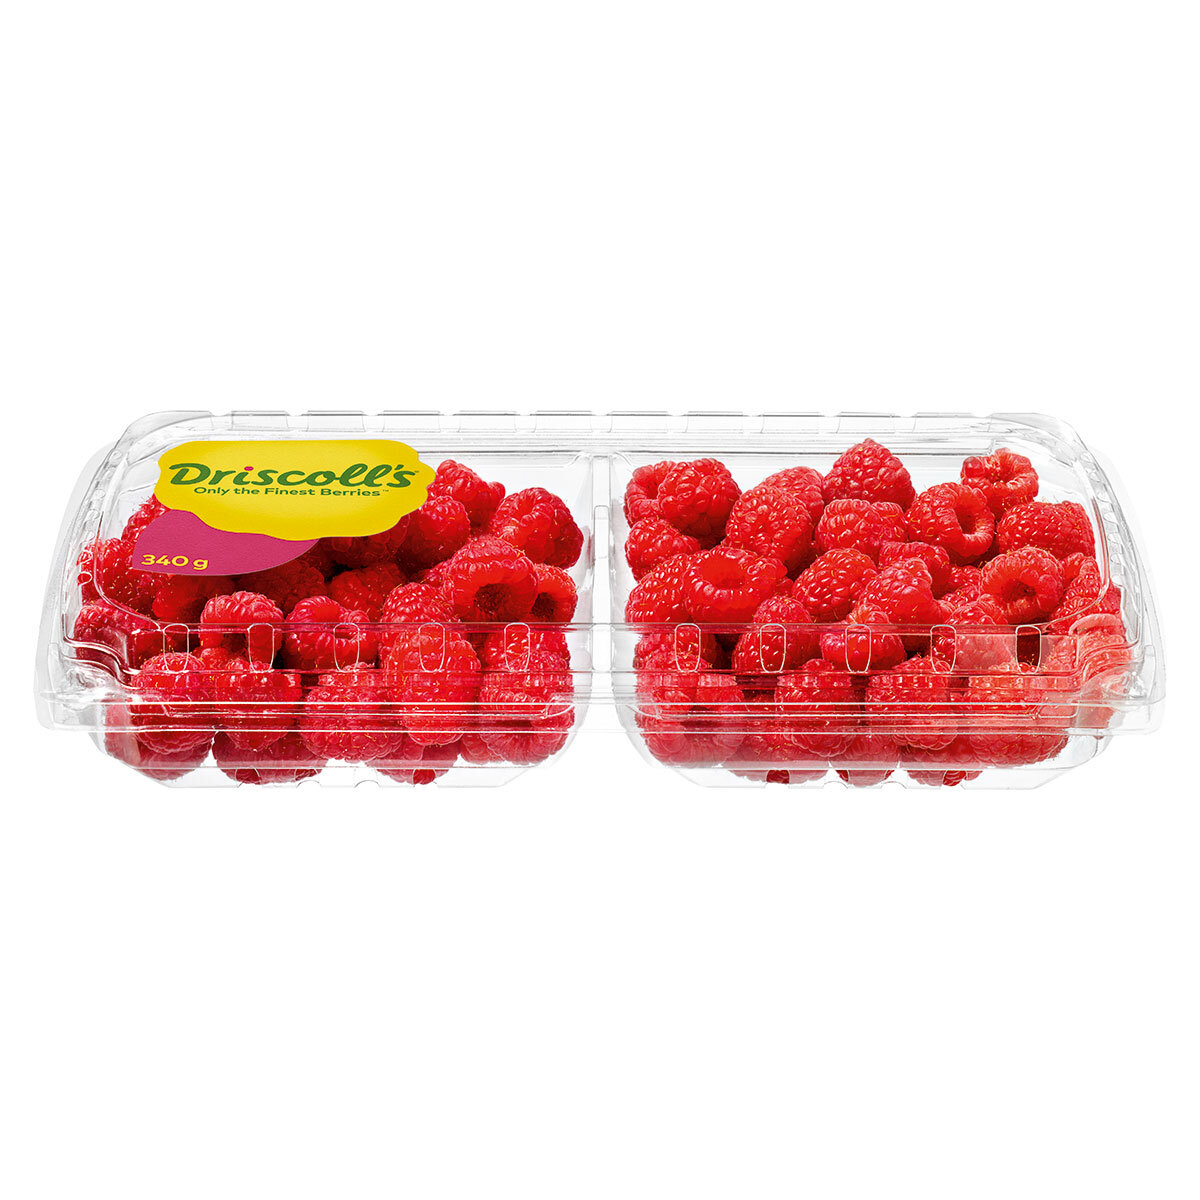 Pack of 340g driscolls Raspberries